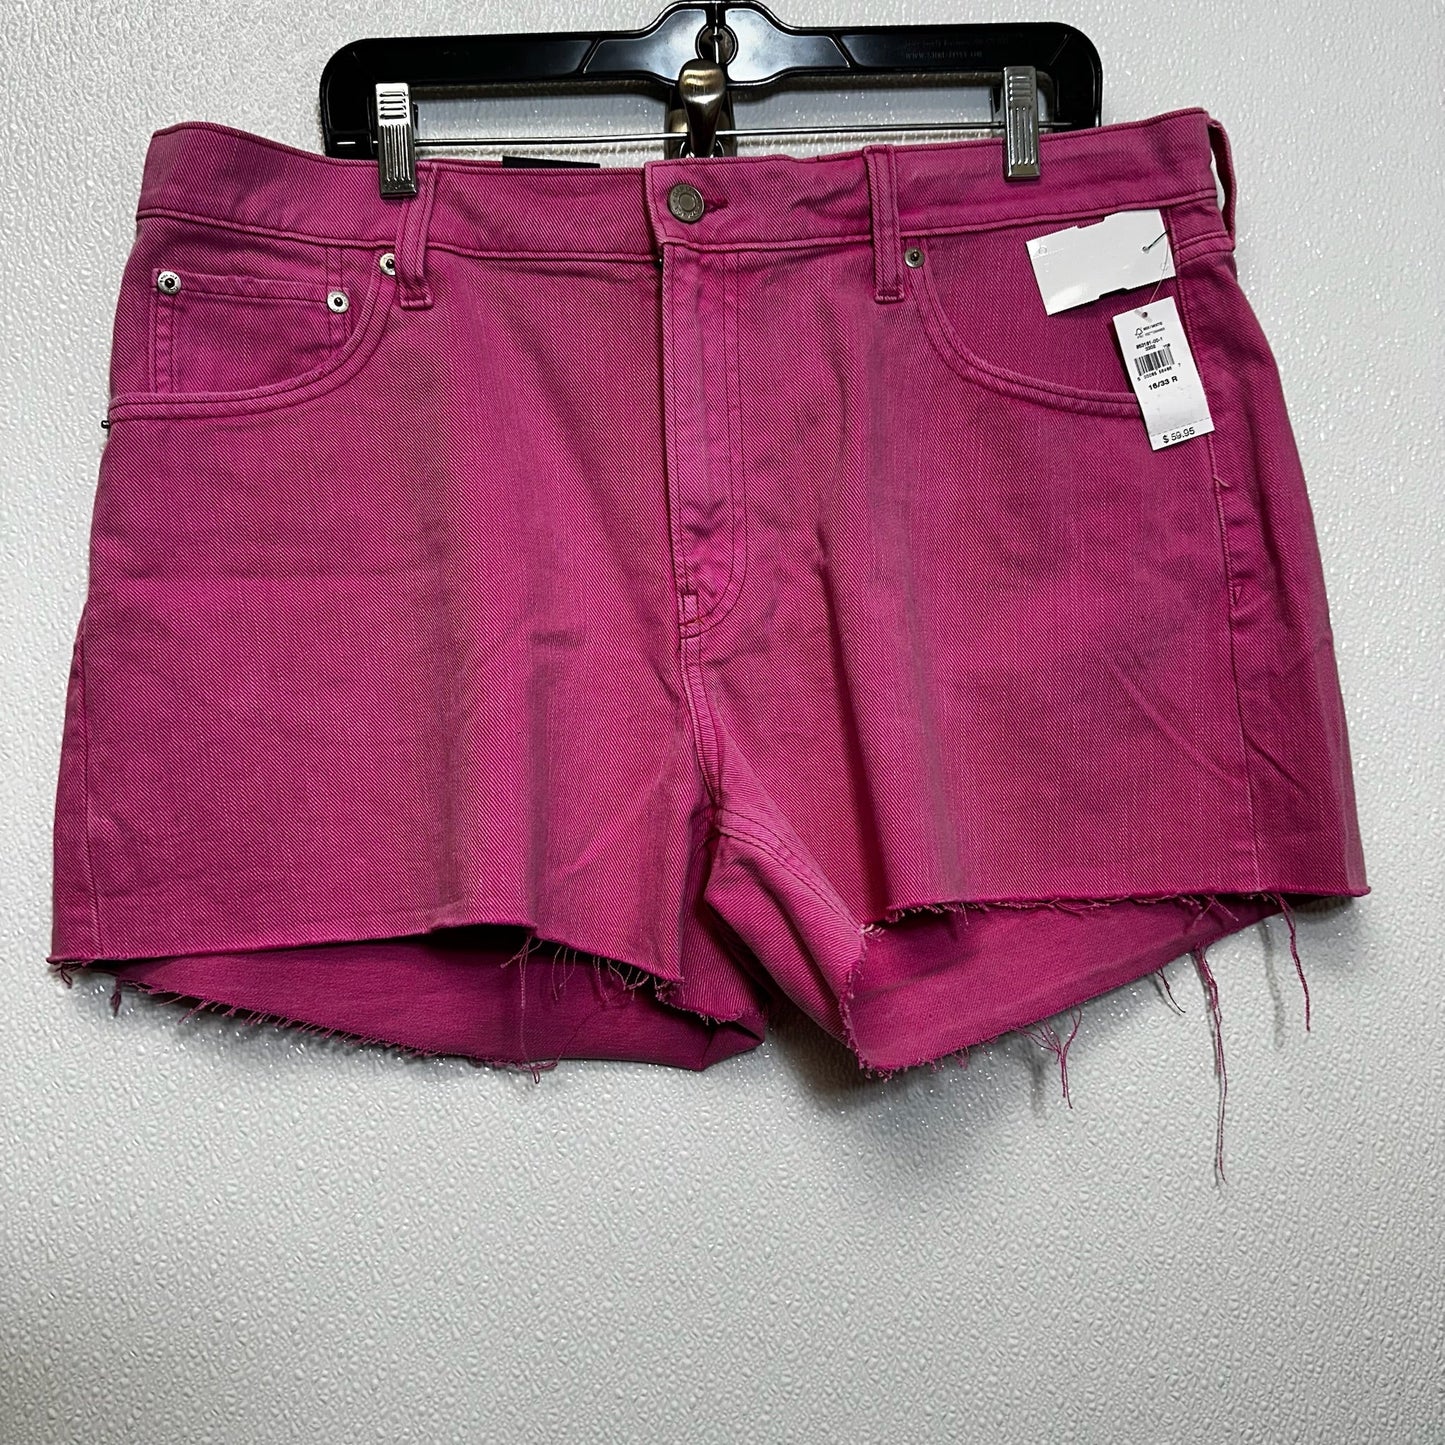 Pink Shorts Gap, Size 16